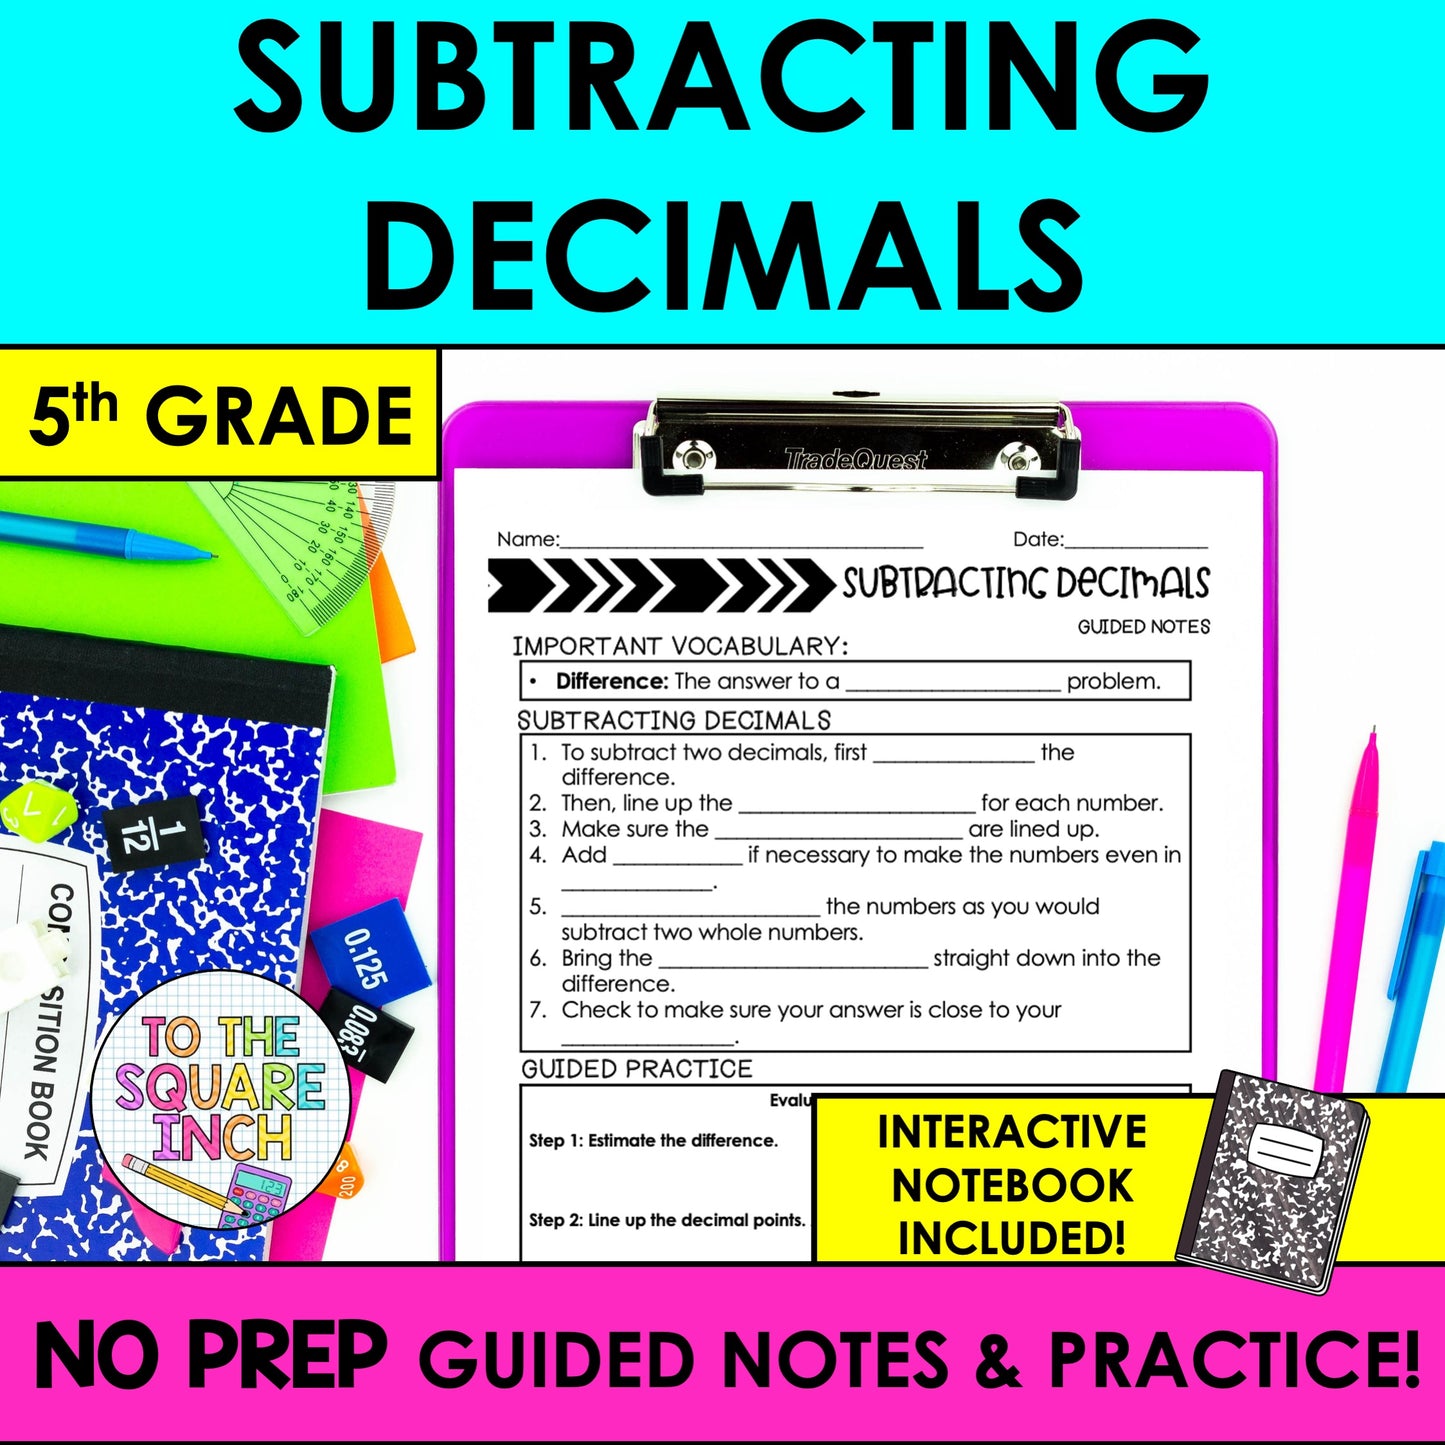 Subtracting Decimals Notes